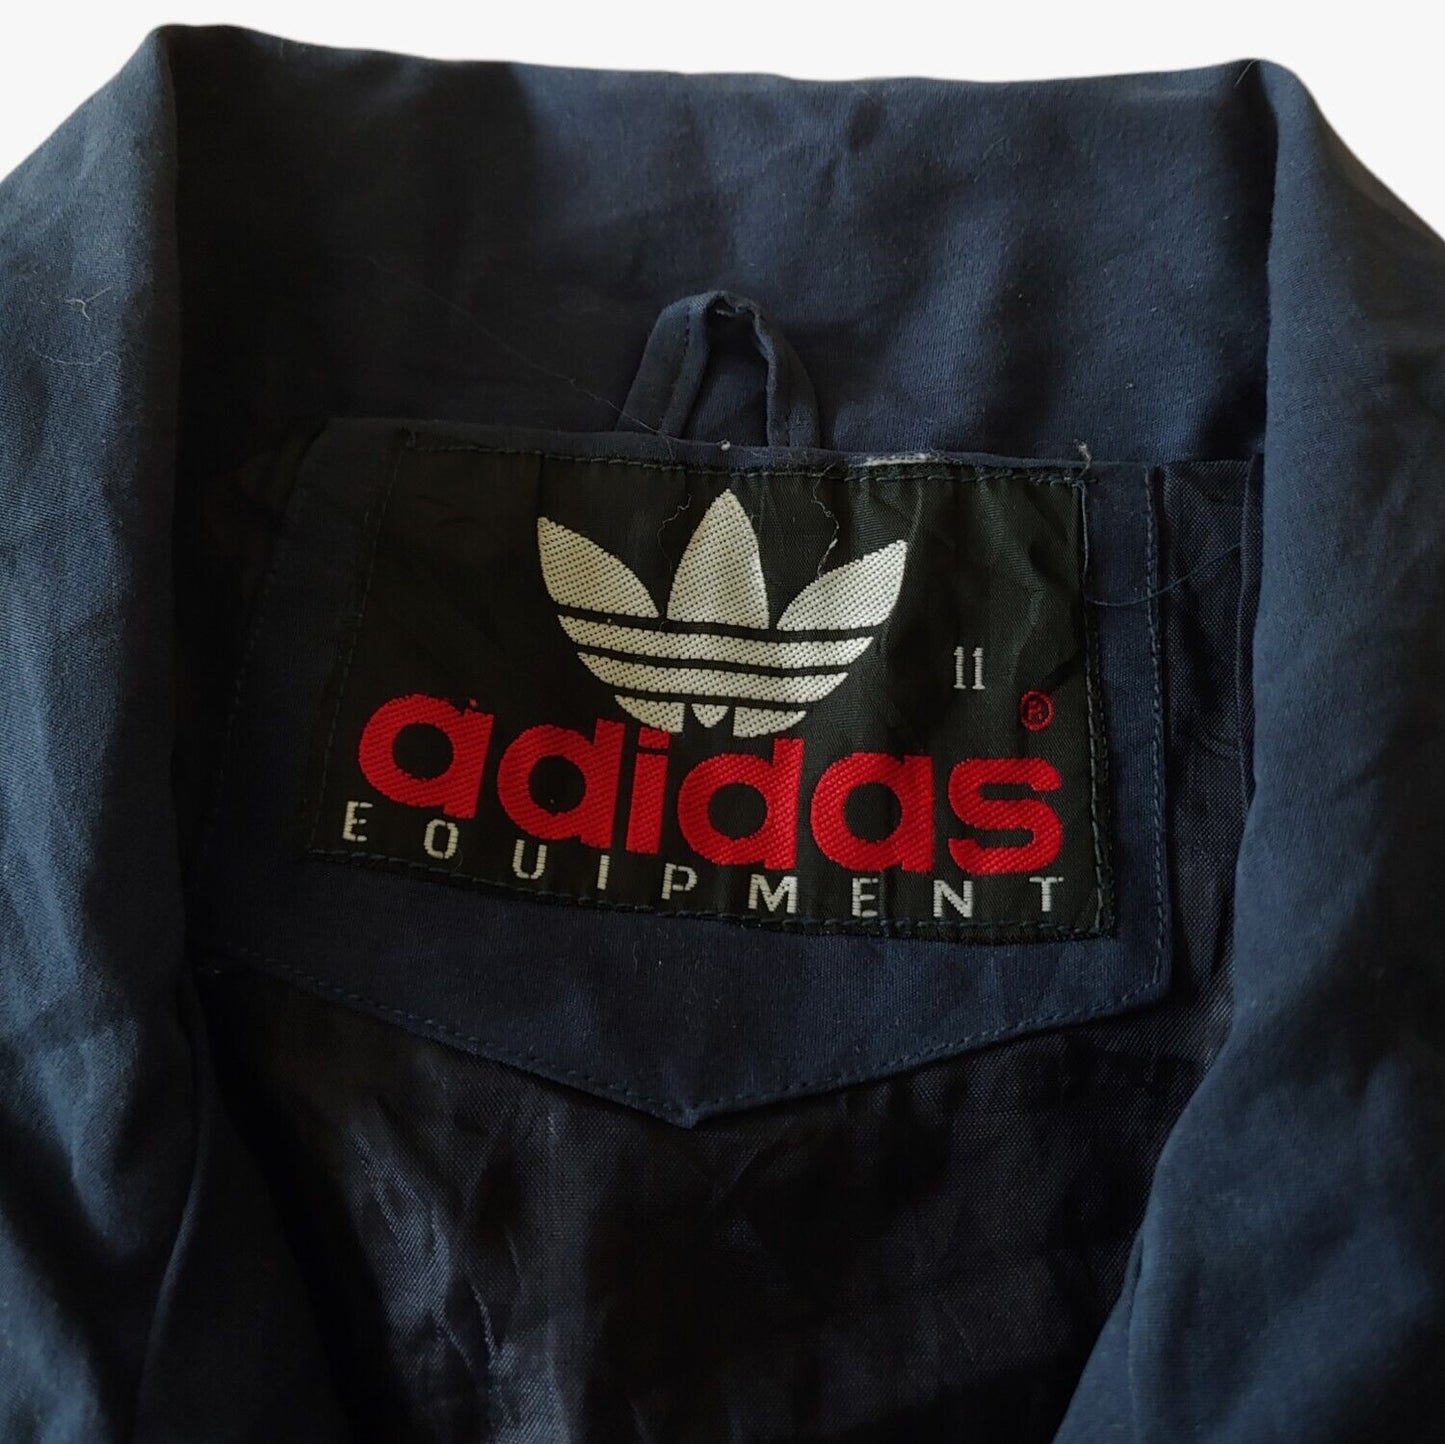 Vintage 90s Adidas Equipment Tactical Vest Gilet Label - Casspios Dream